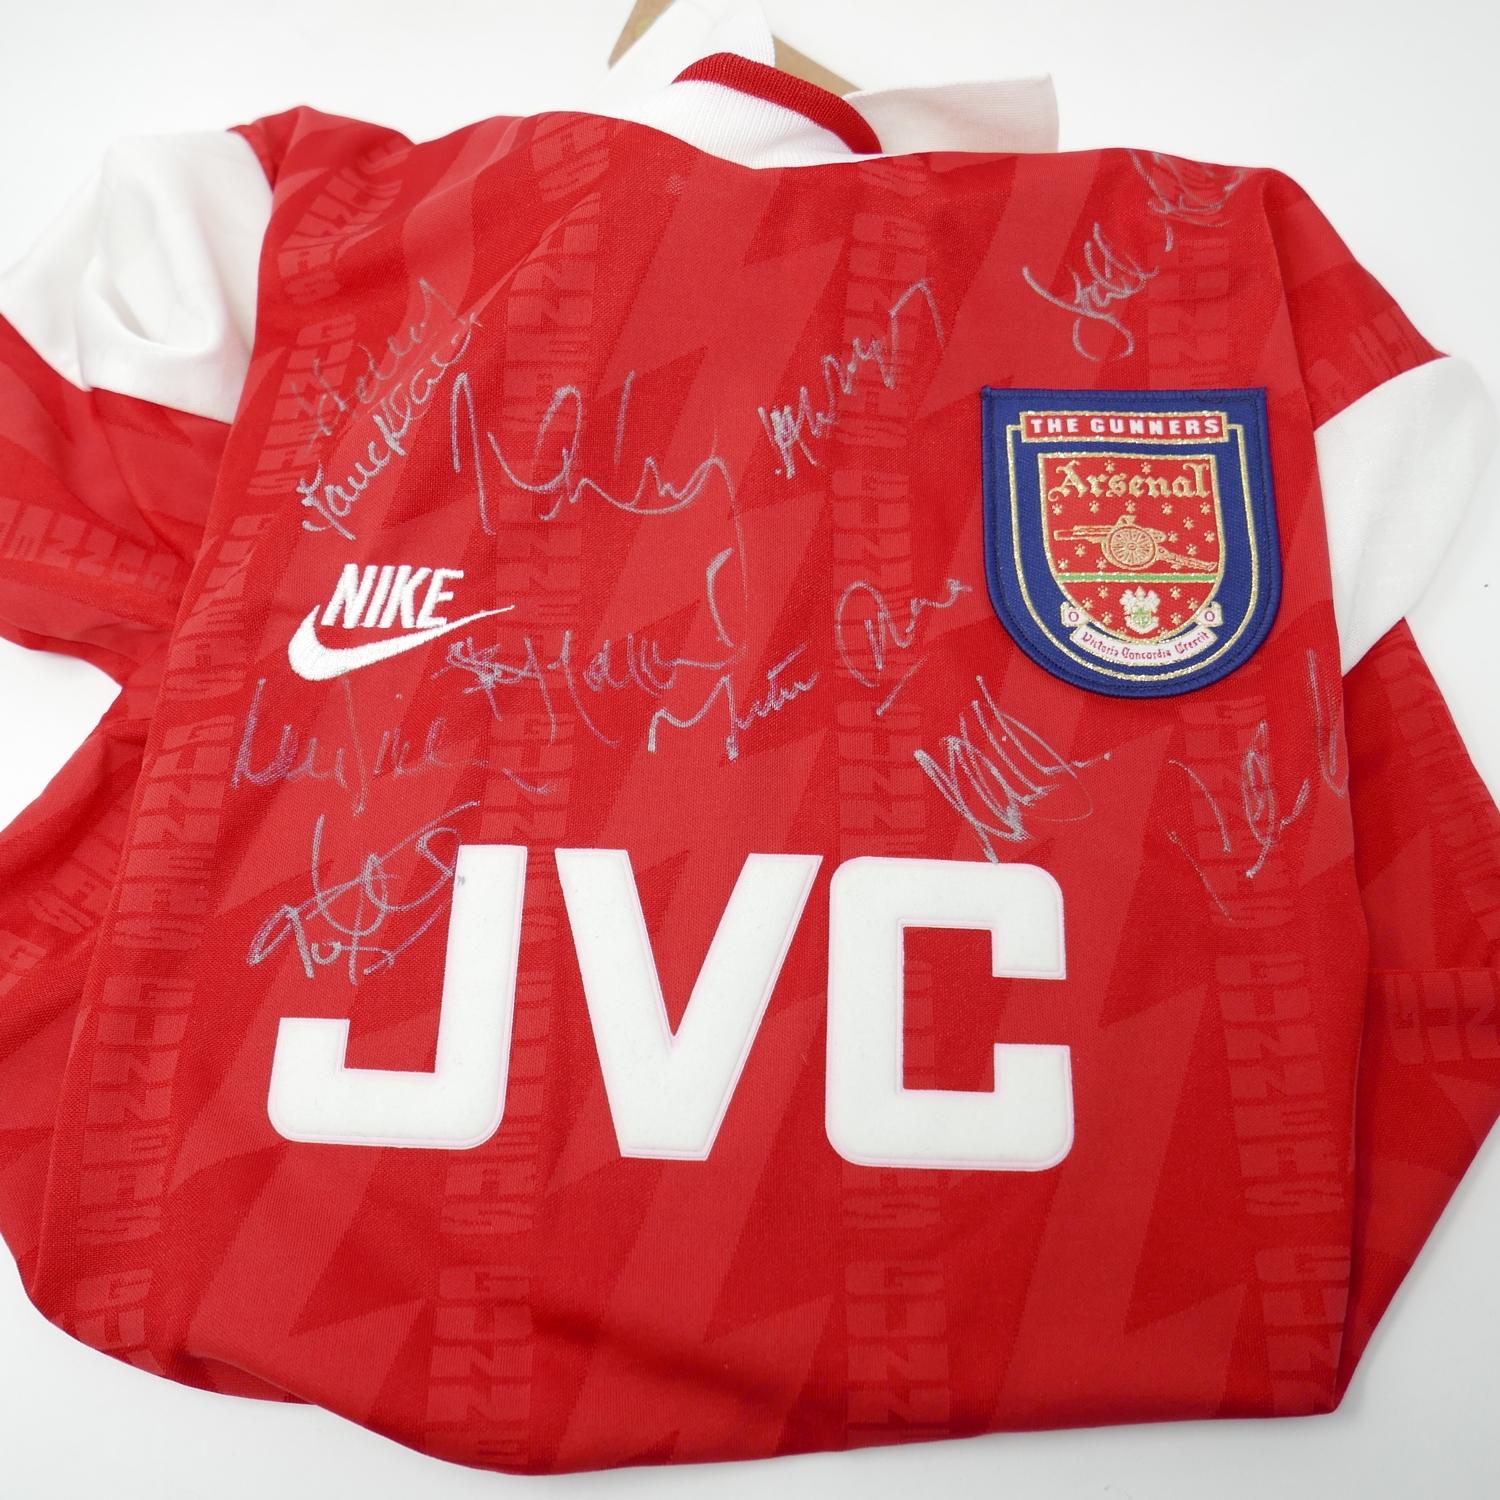 A 1990's signed Arsenal football shirt